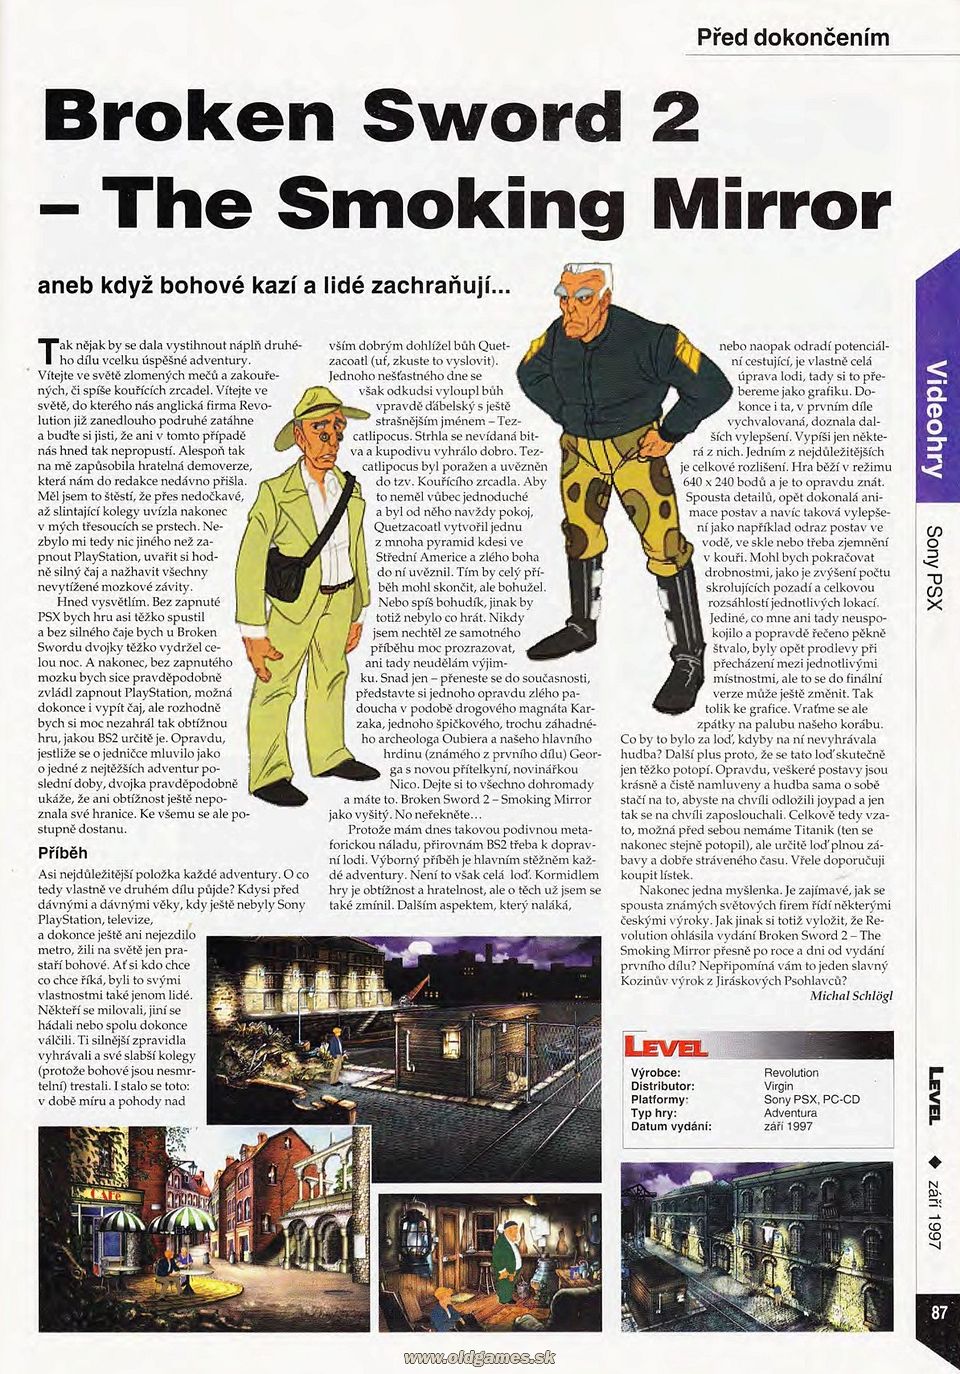 Preview: Broken Sword 2 - The Smoking Mirror